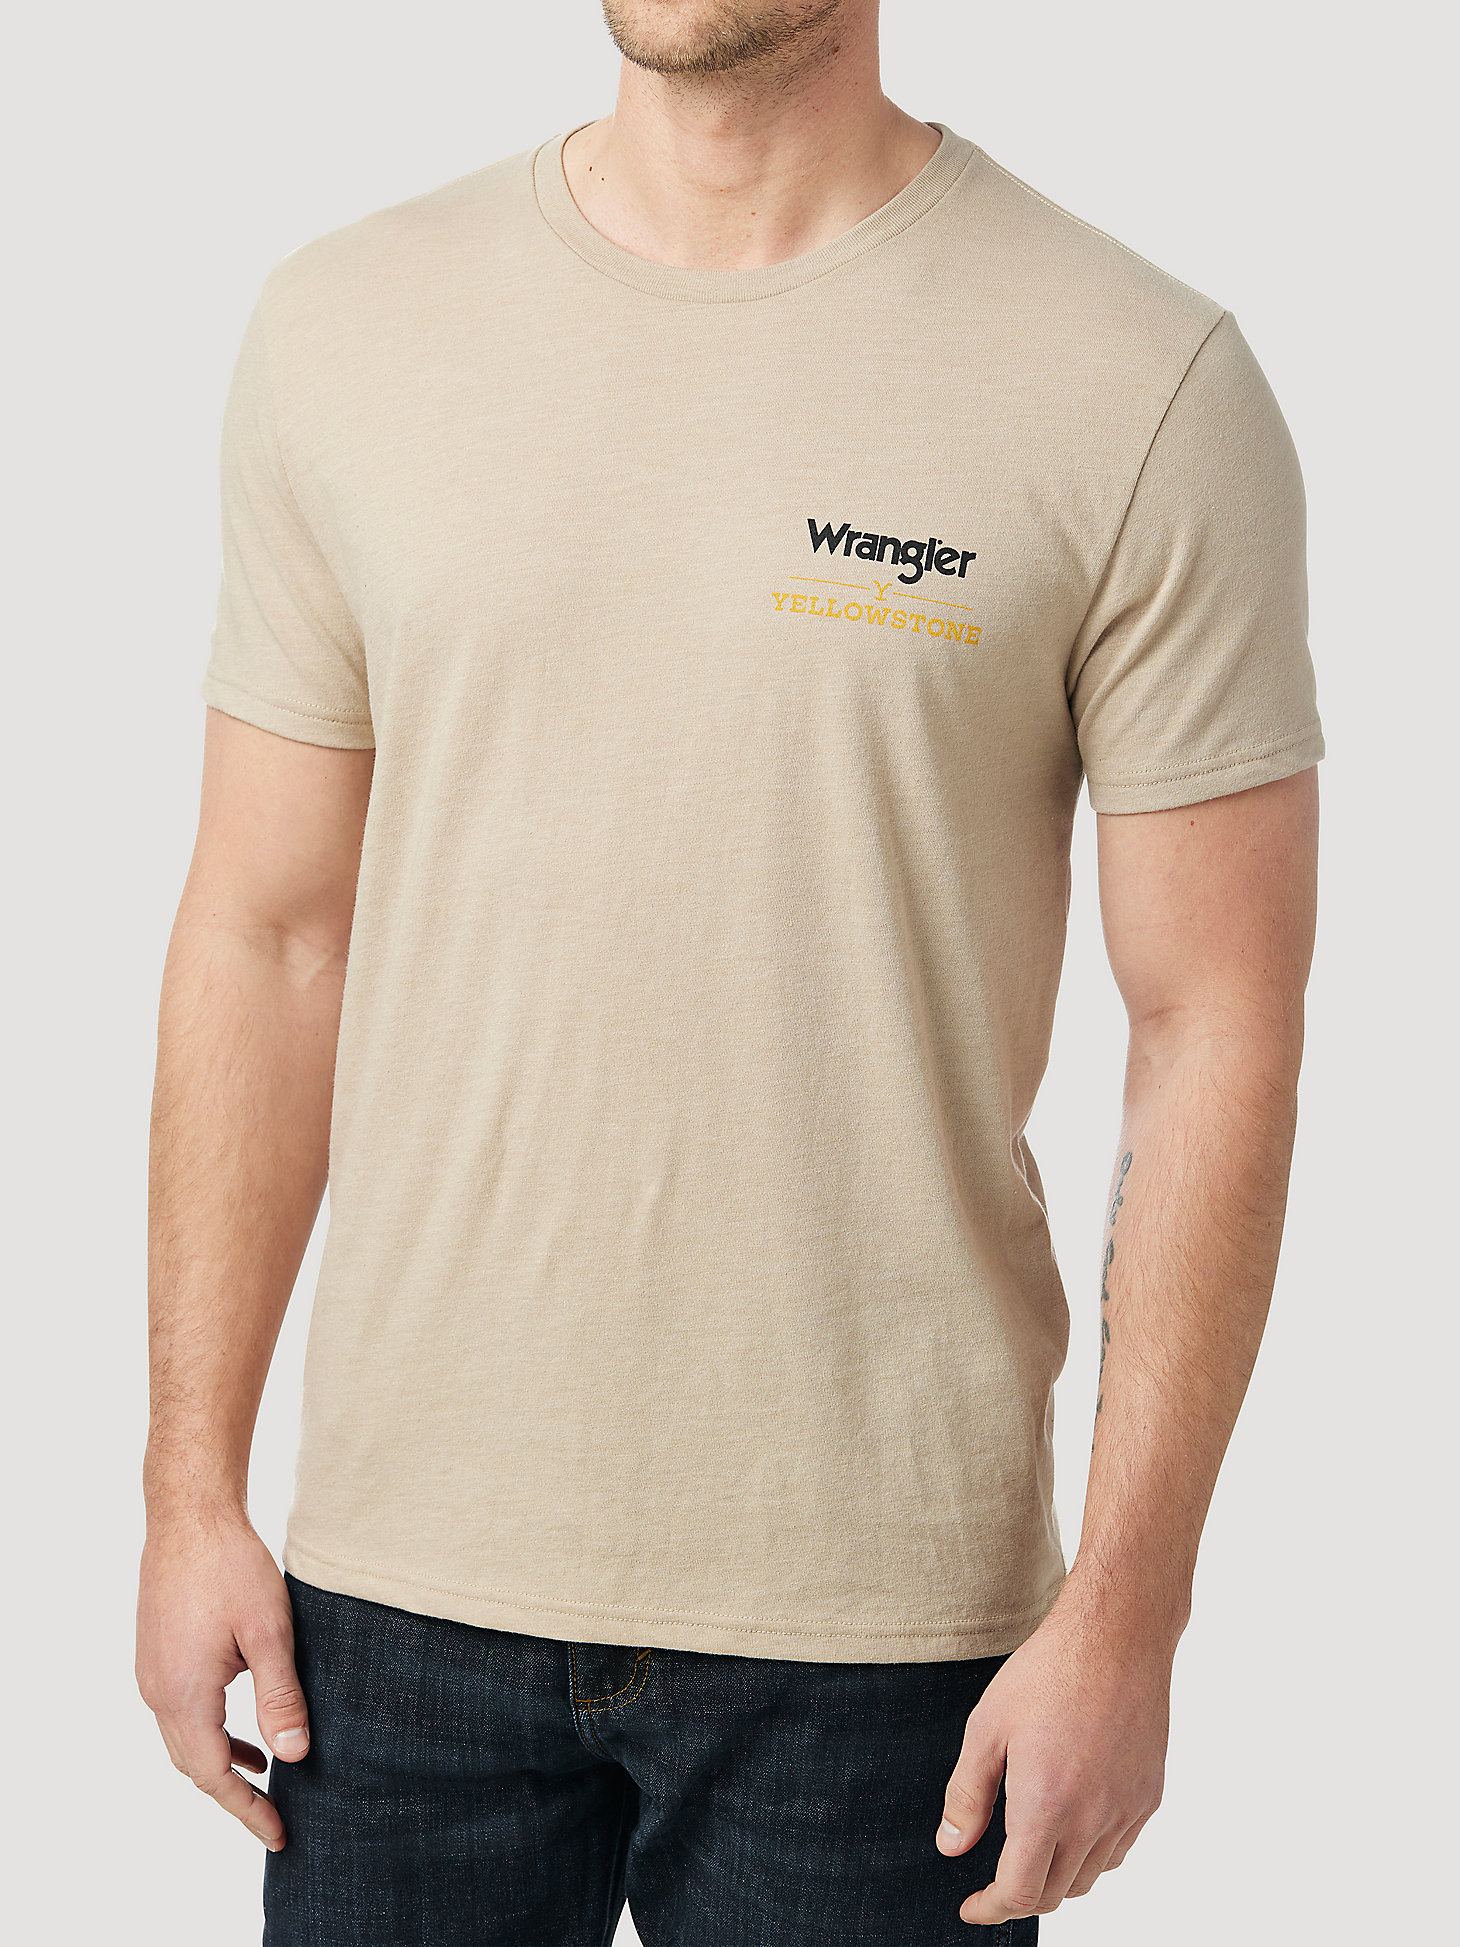 Wrangler x Yellowstone Men's Montana T-Shirt in Trench Coat alternative view 3